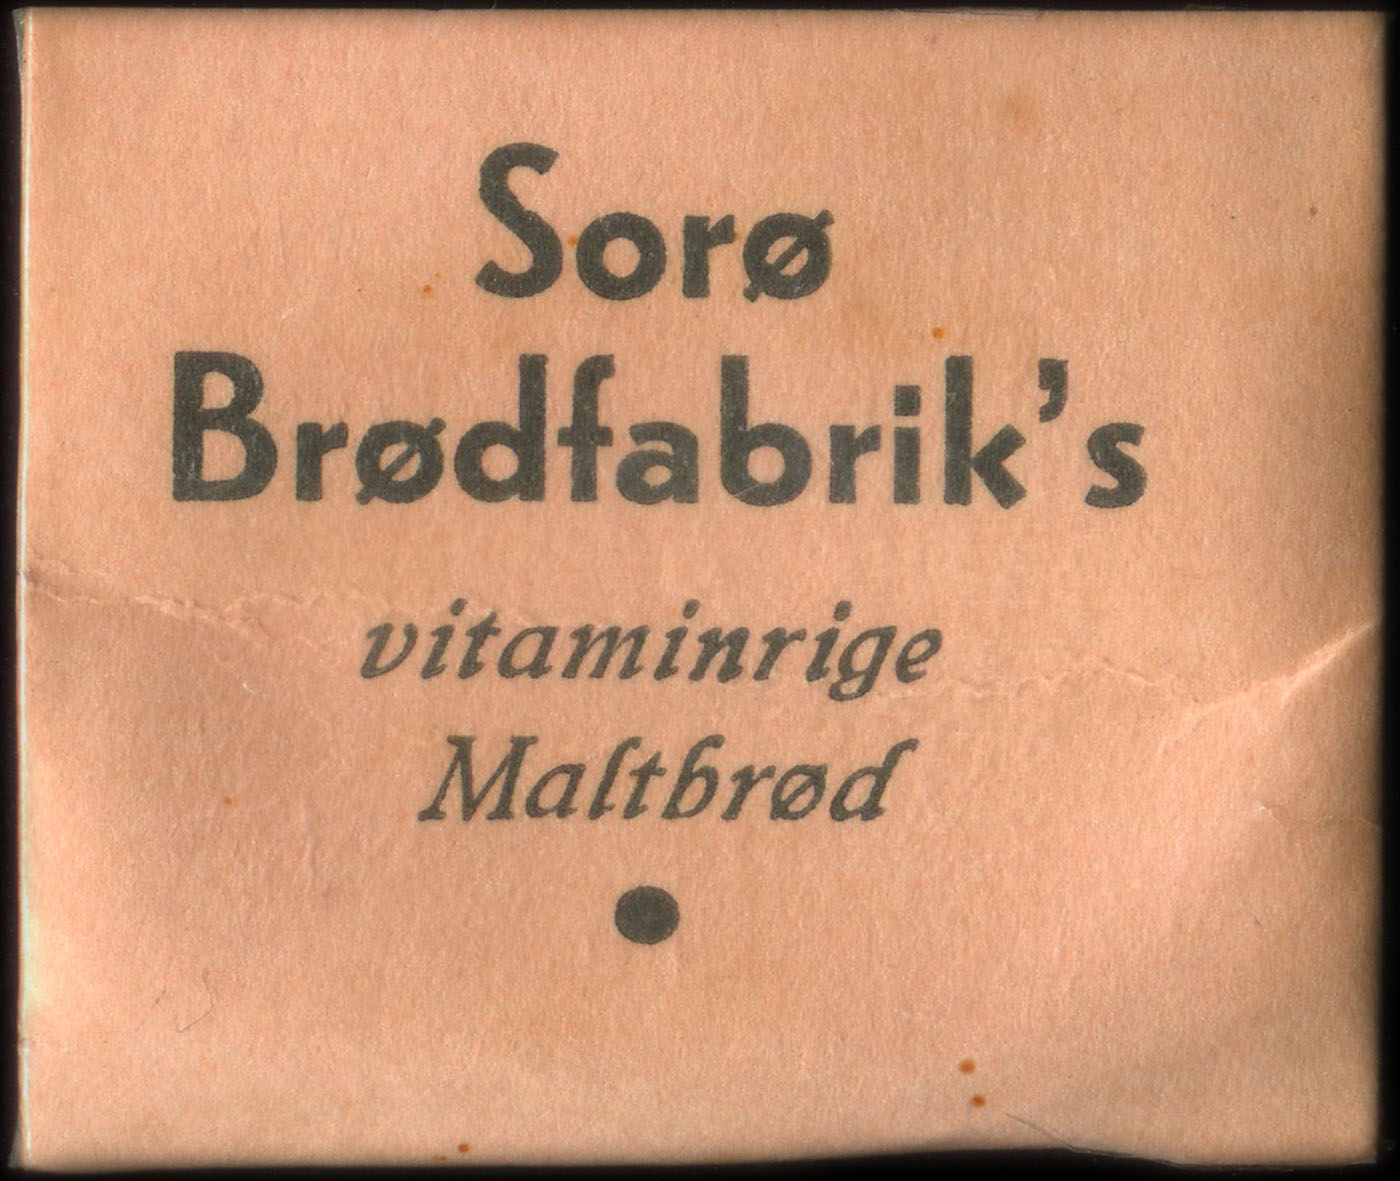 Timbre-monnaie Sor Brødfabrik’s vitaminrige Maltbrød - Danemark